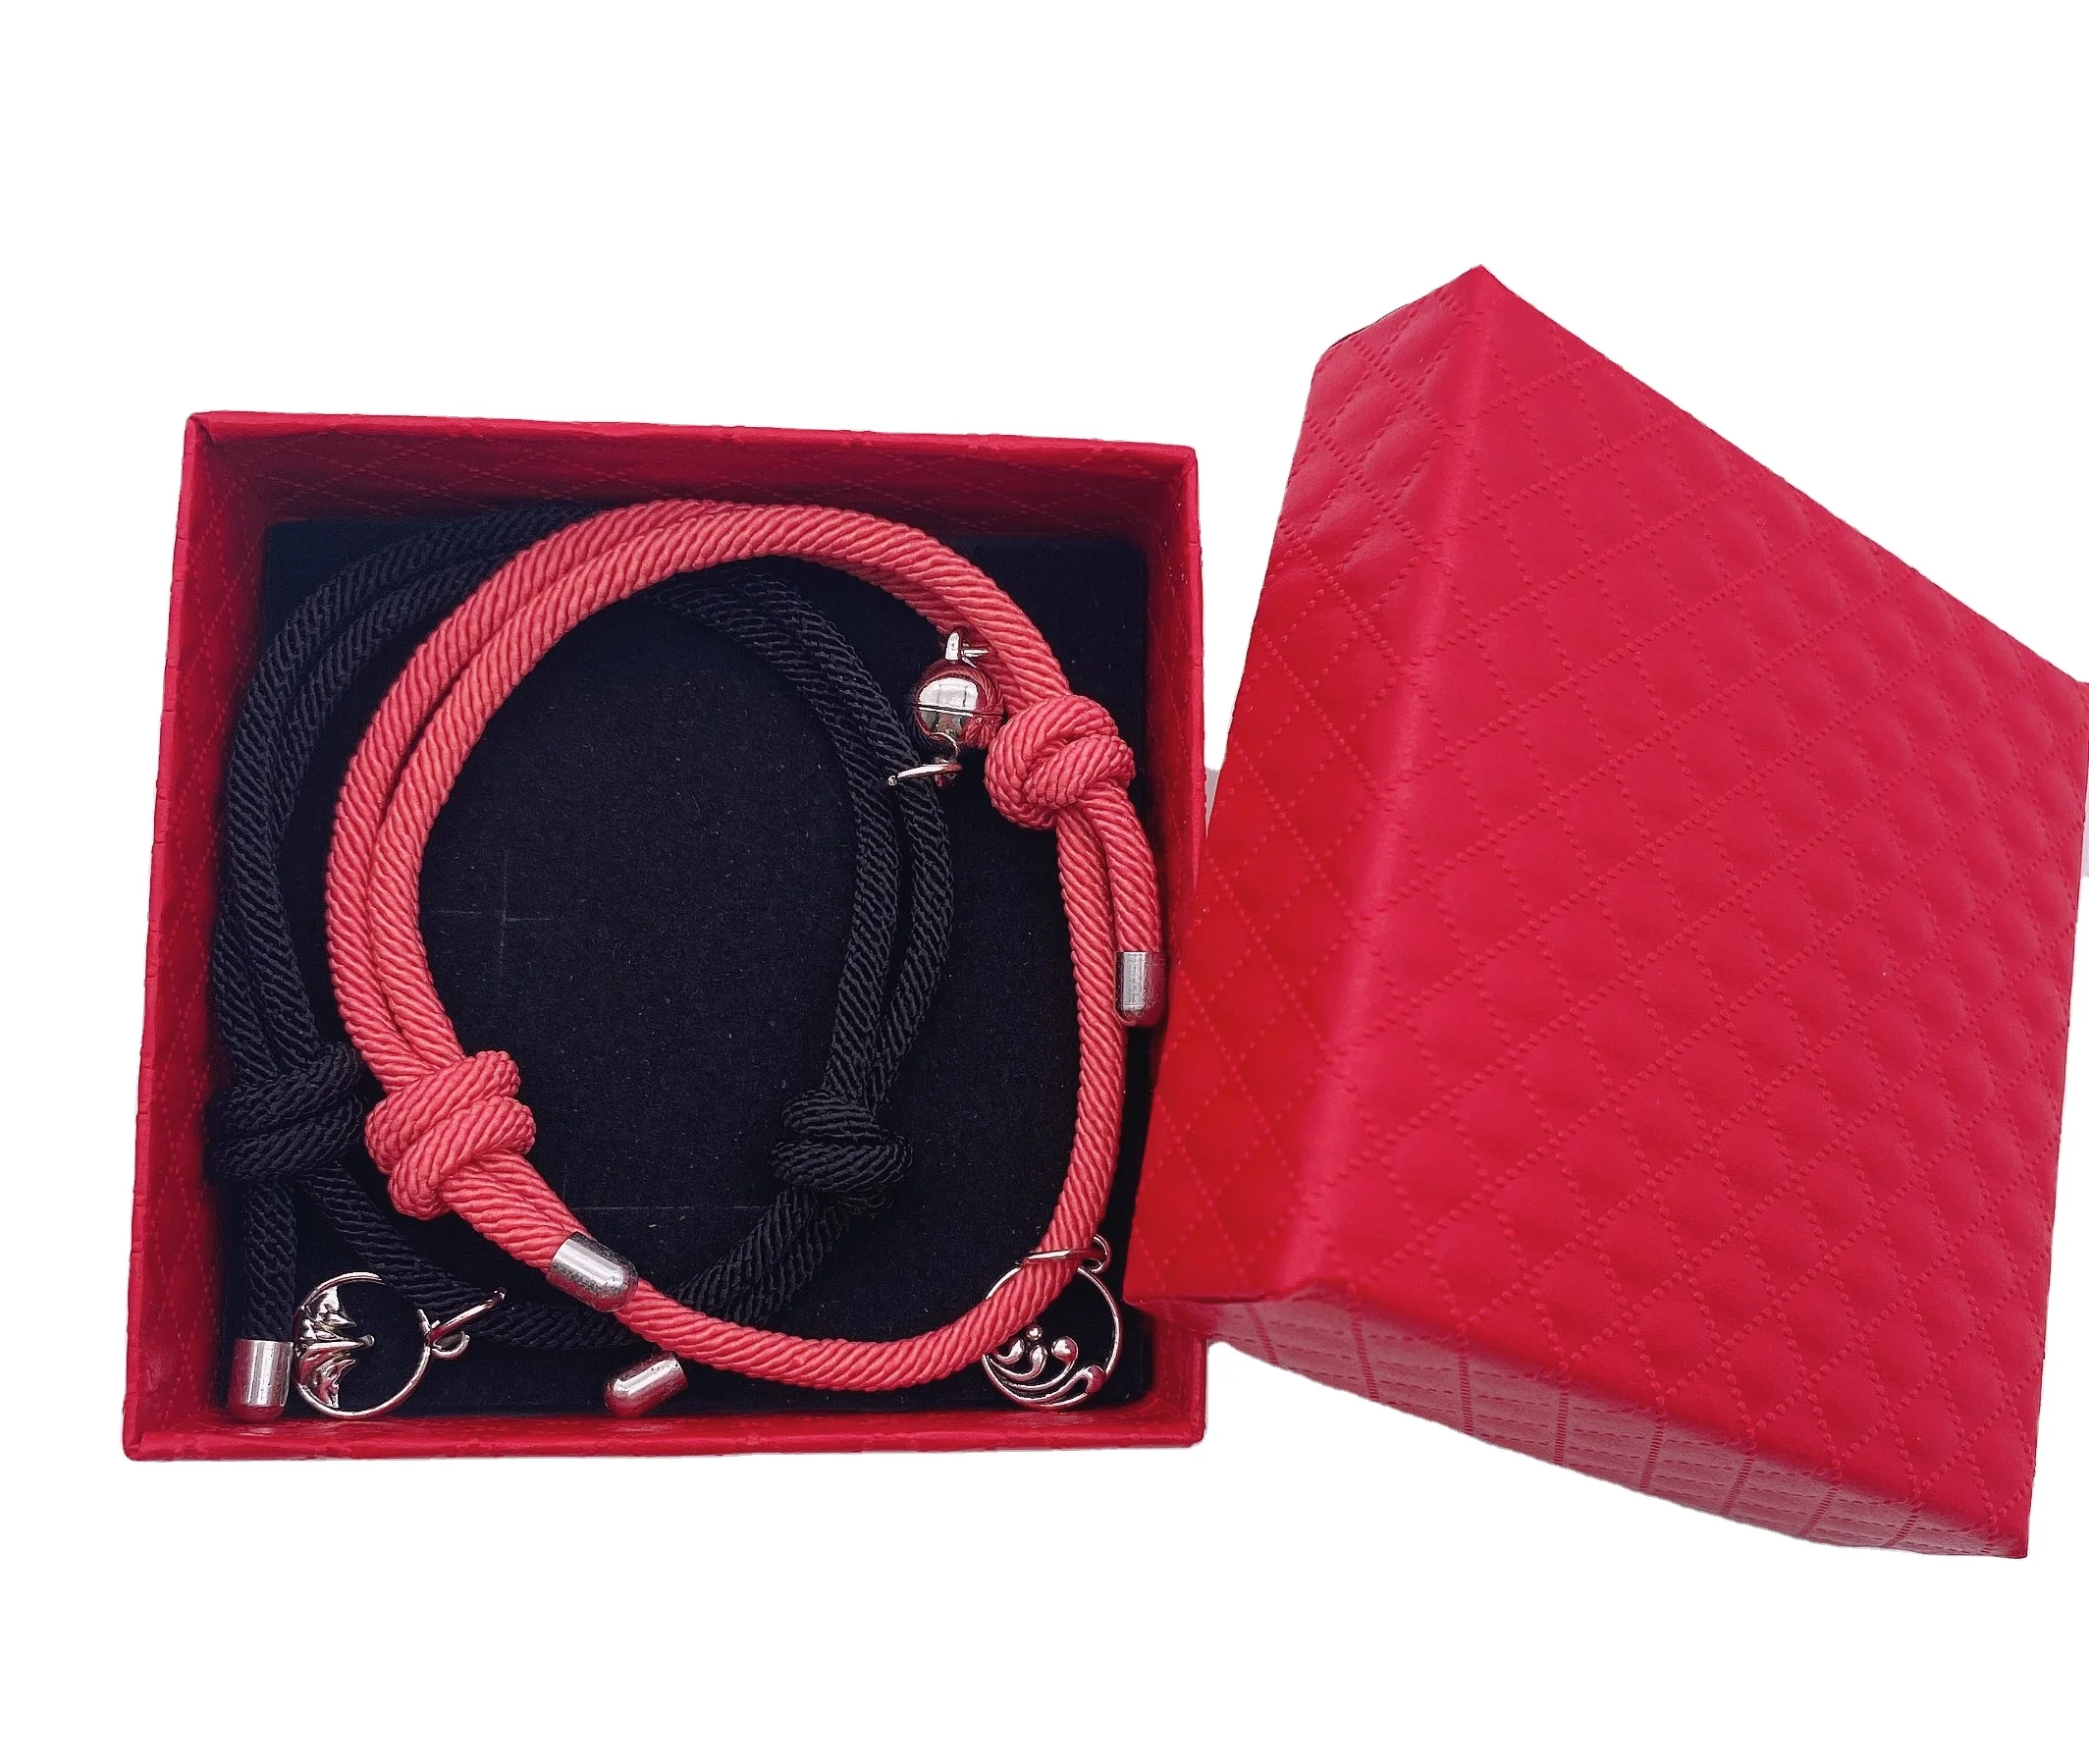 

Handmade Jewelry pulsera iman Charm Bangle Unisex Best Friend Lucky Gift Box Magnetic couple magnet Bracelet pulsera de iman, Red,black, blue,green,pink